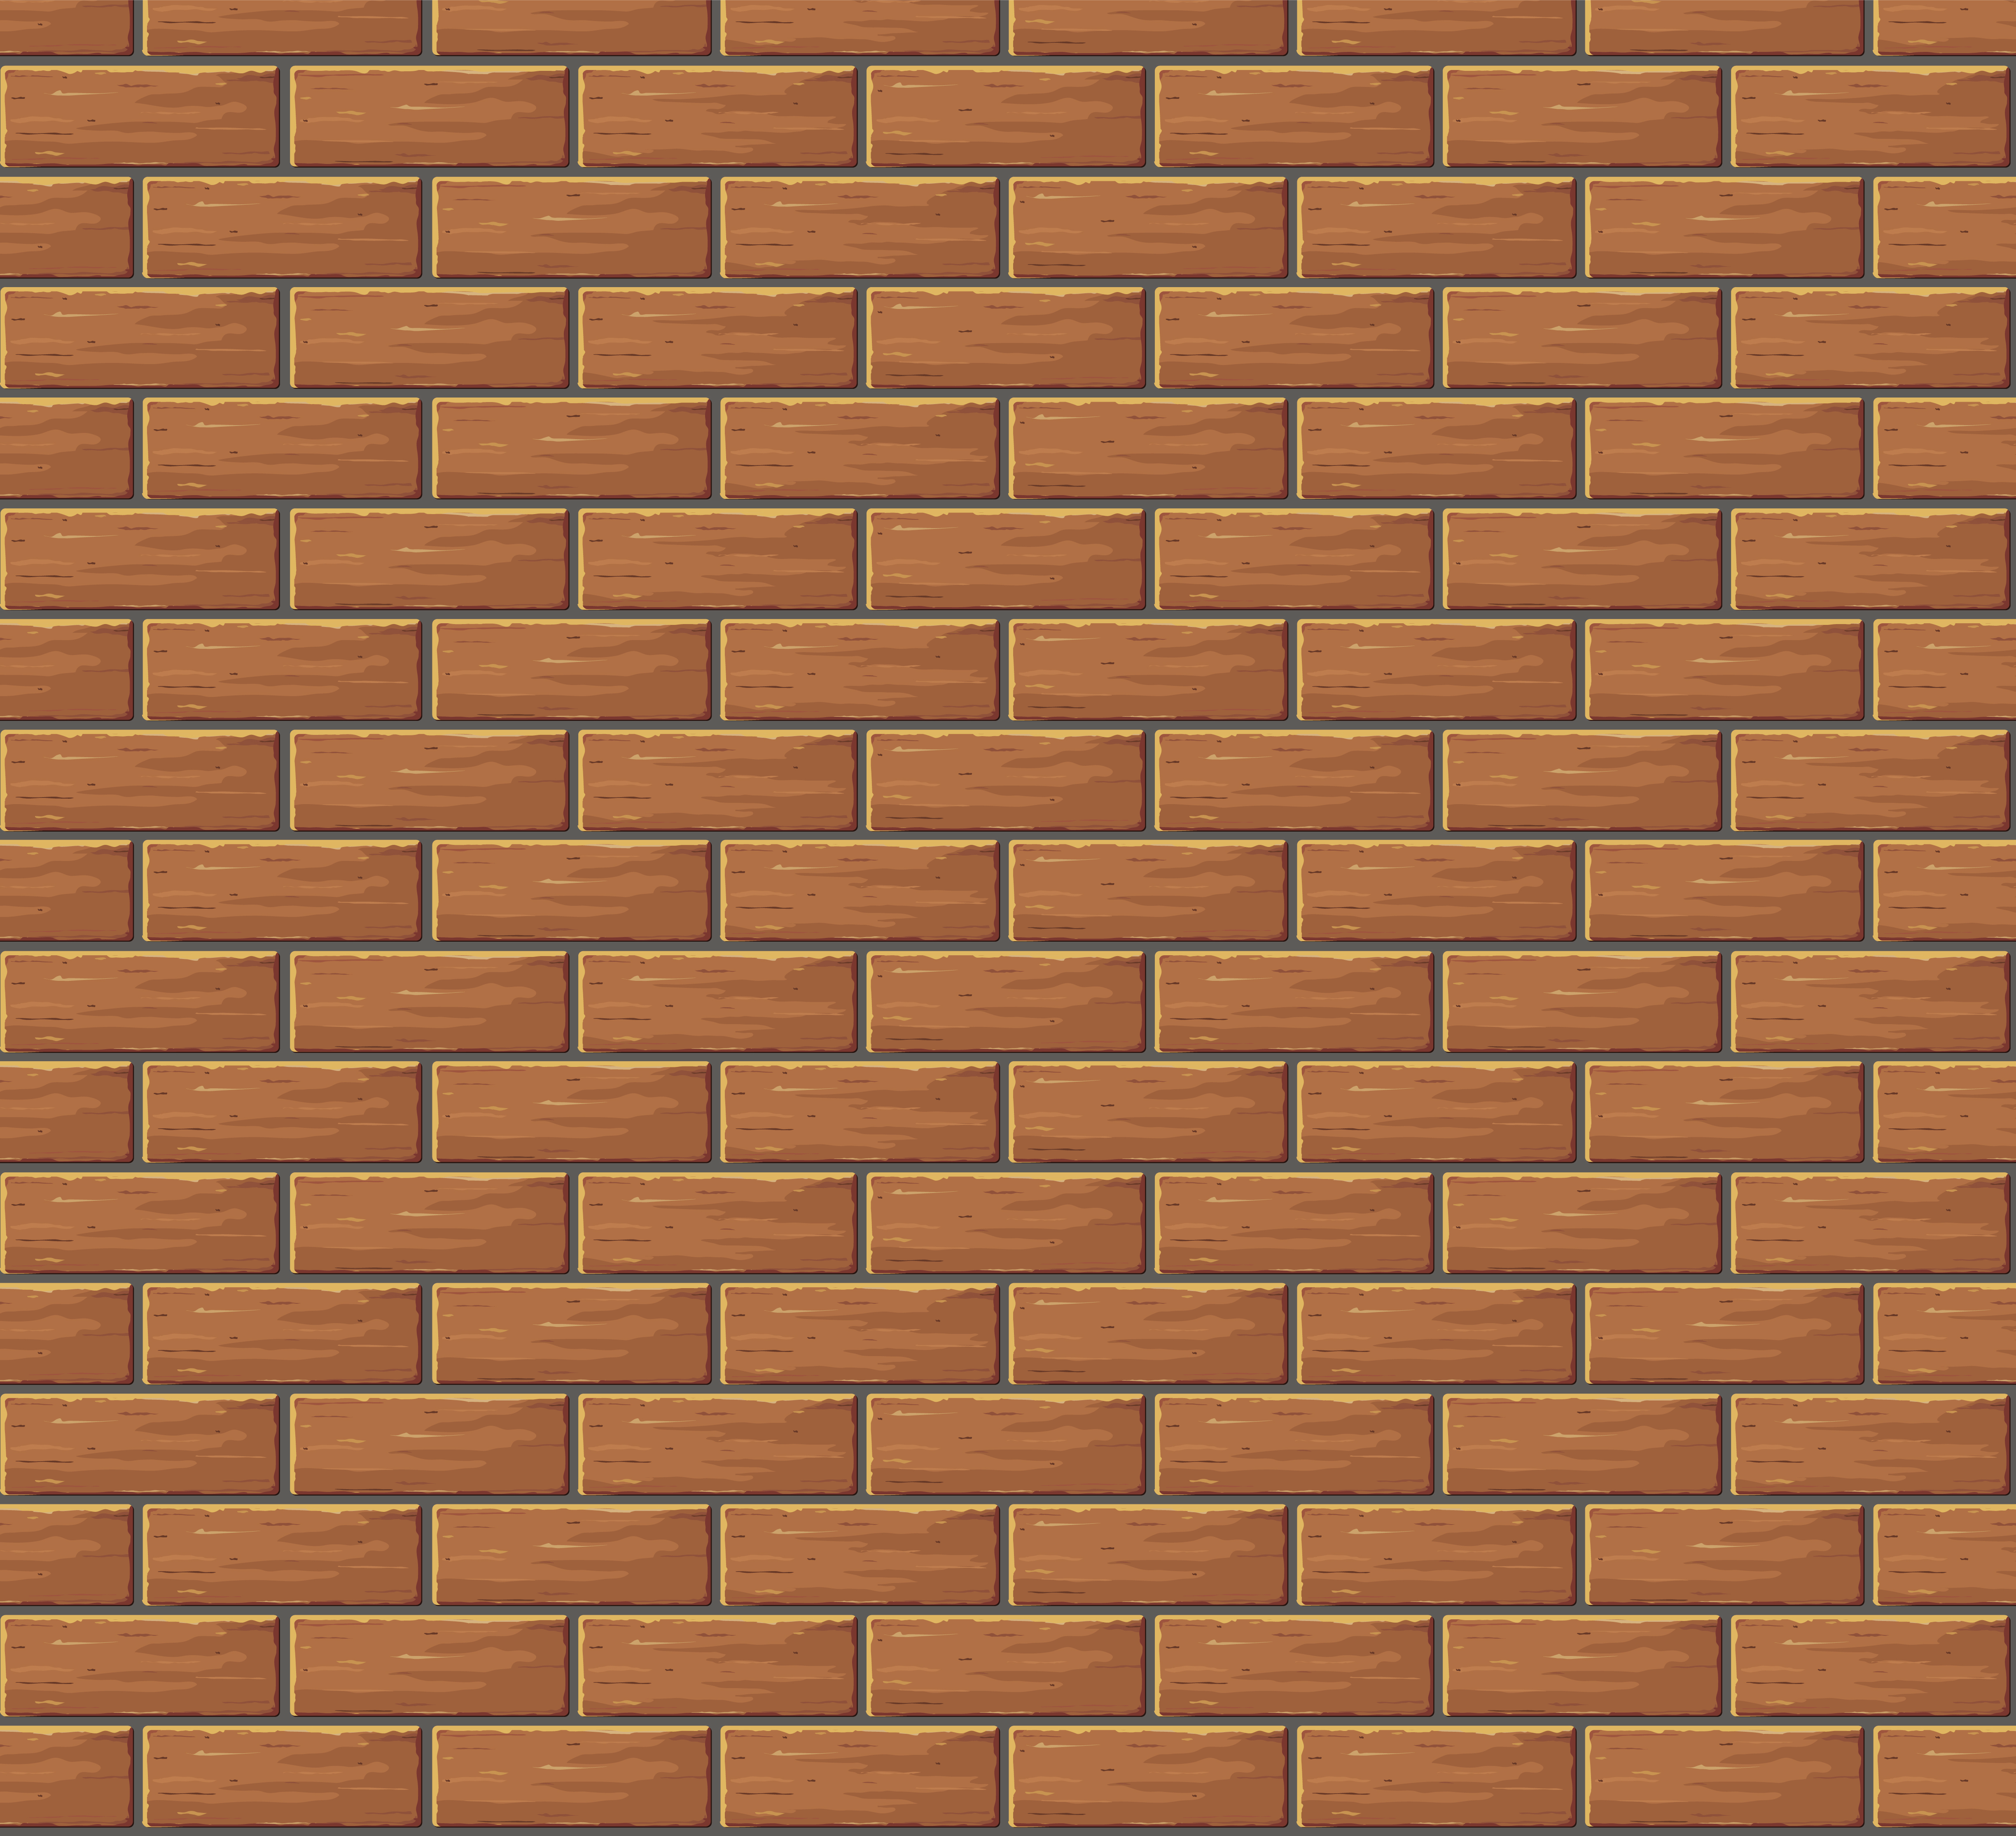 Brick Wall Clipart 75033